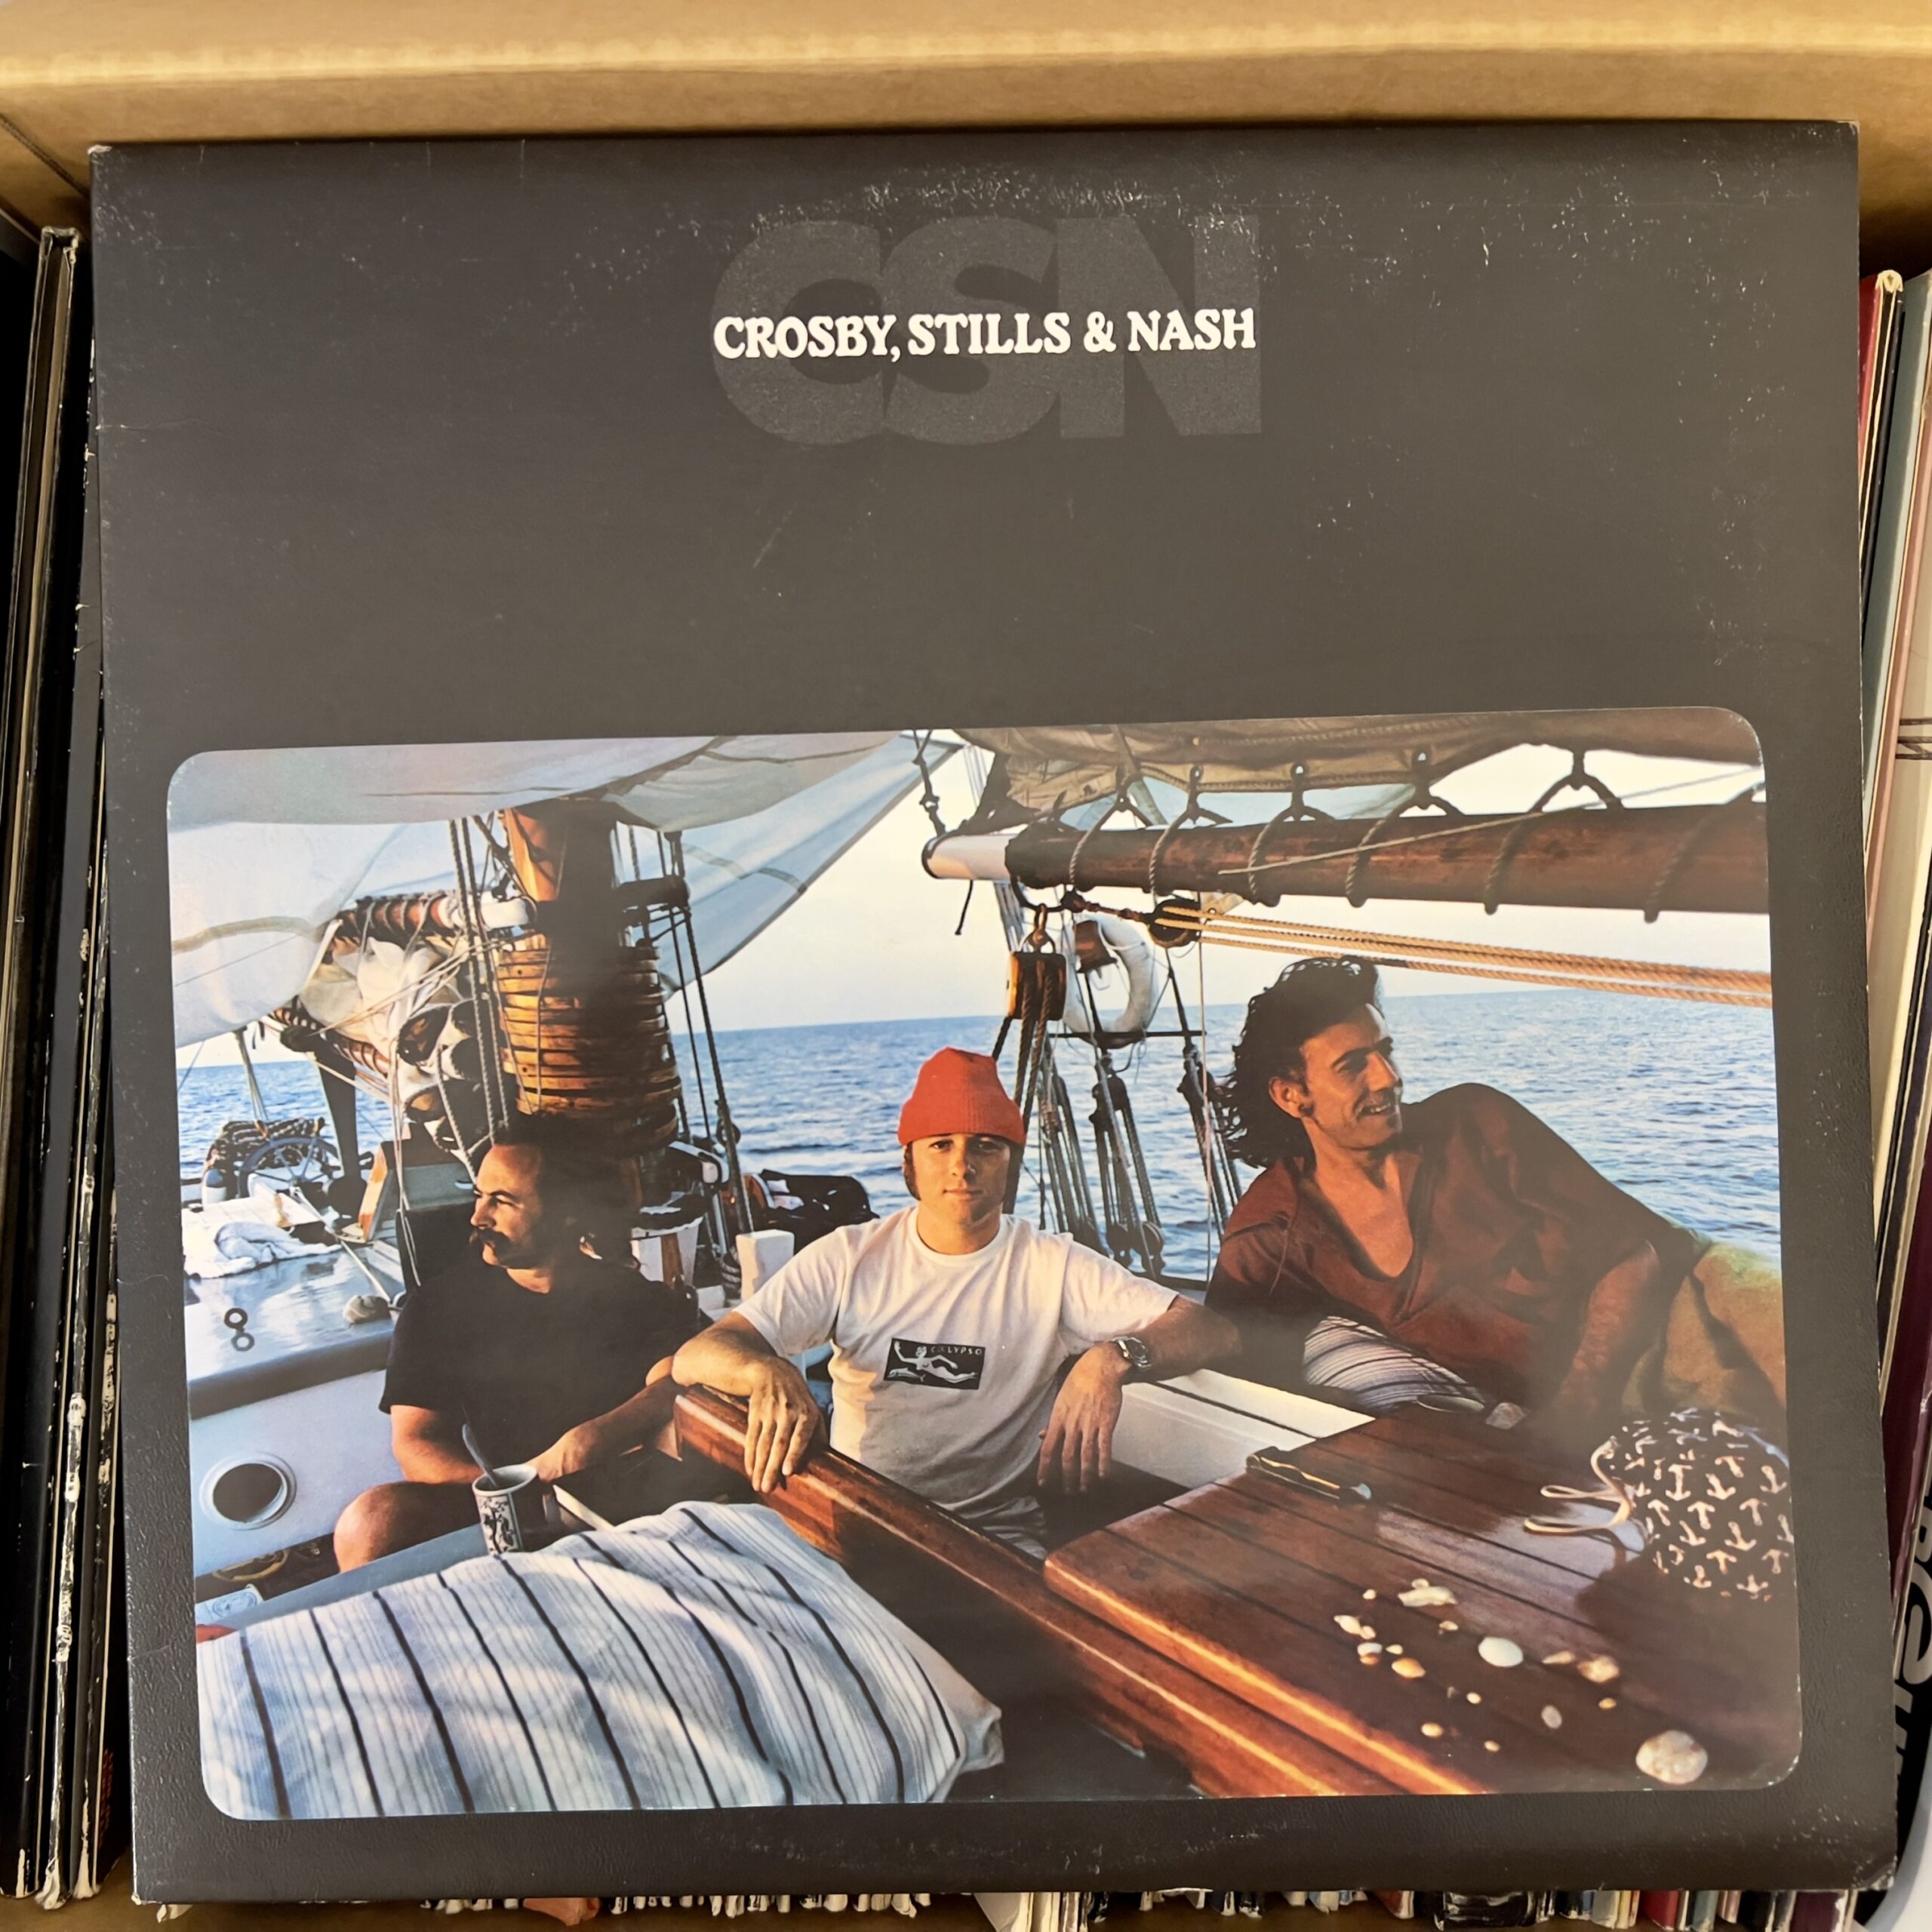 CSN by Crosby, Stills & Nash